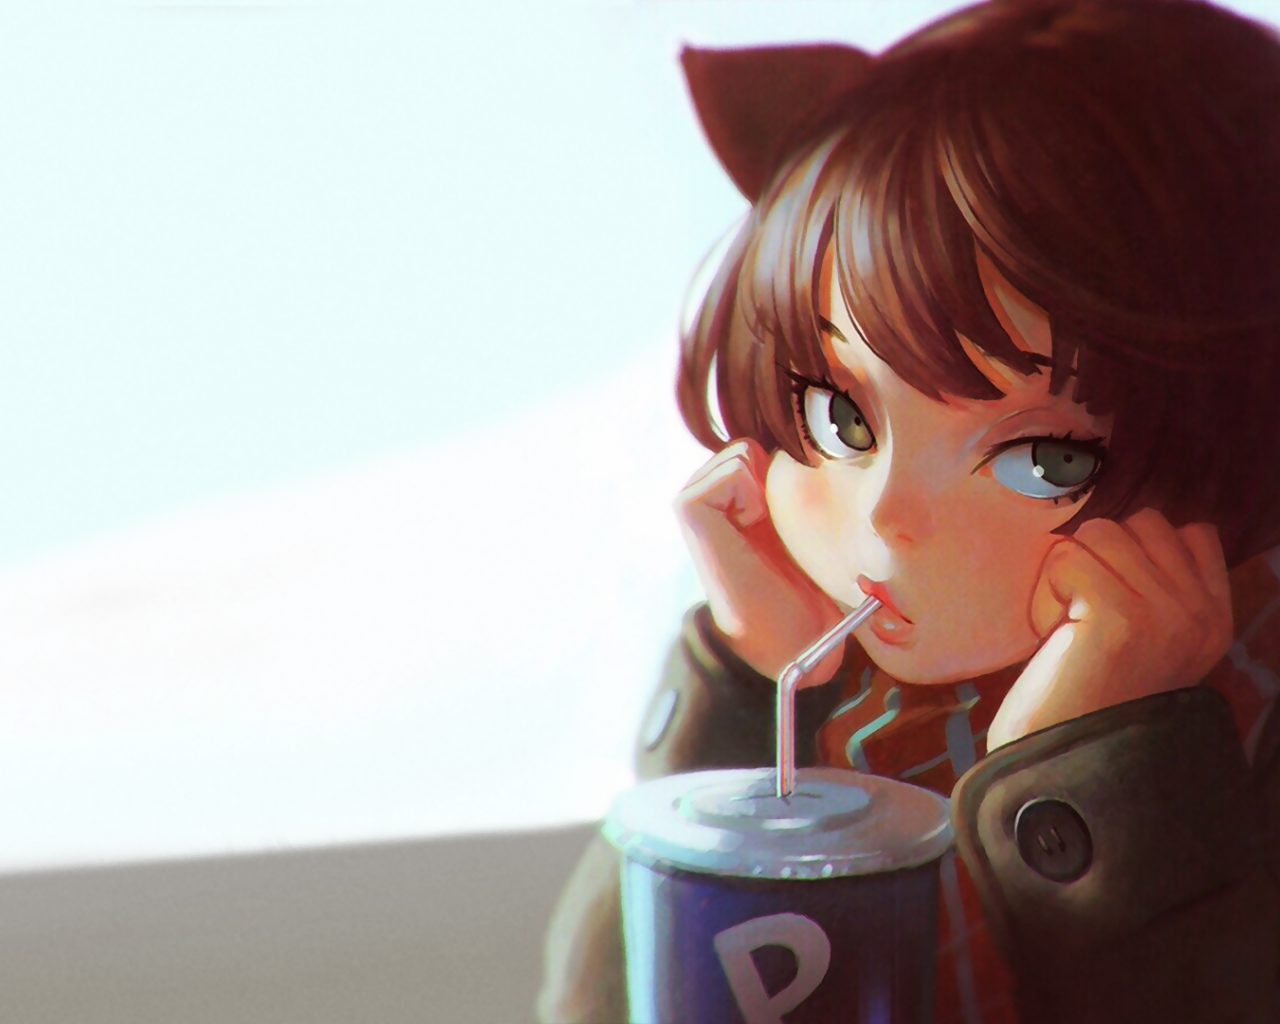 Cute Anime Girl Drinking Coffee gambar ke 15